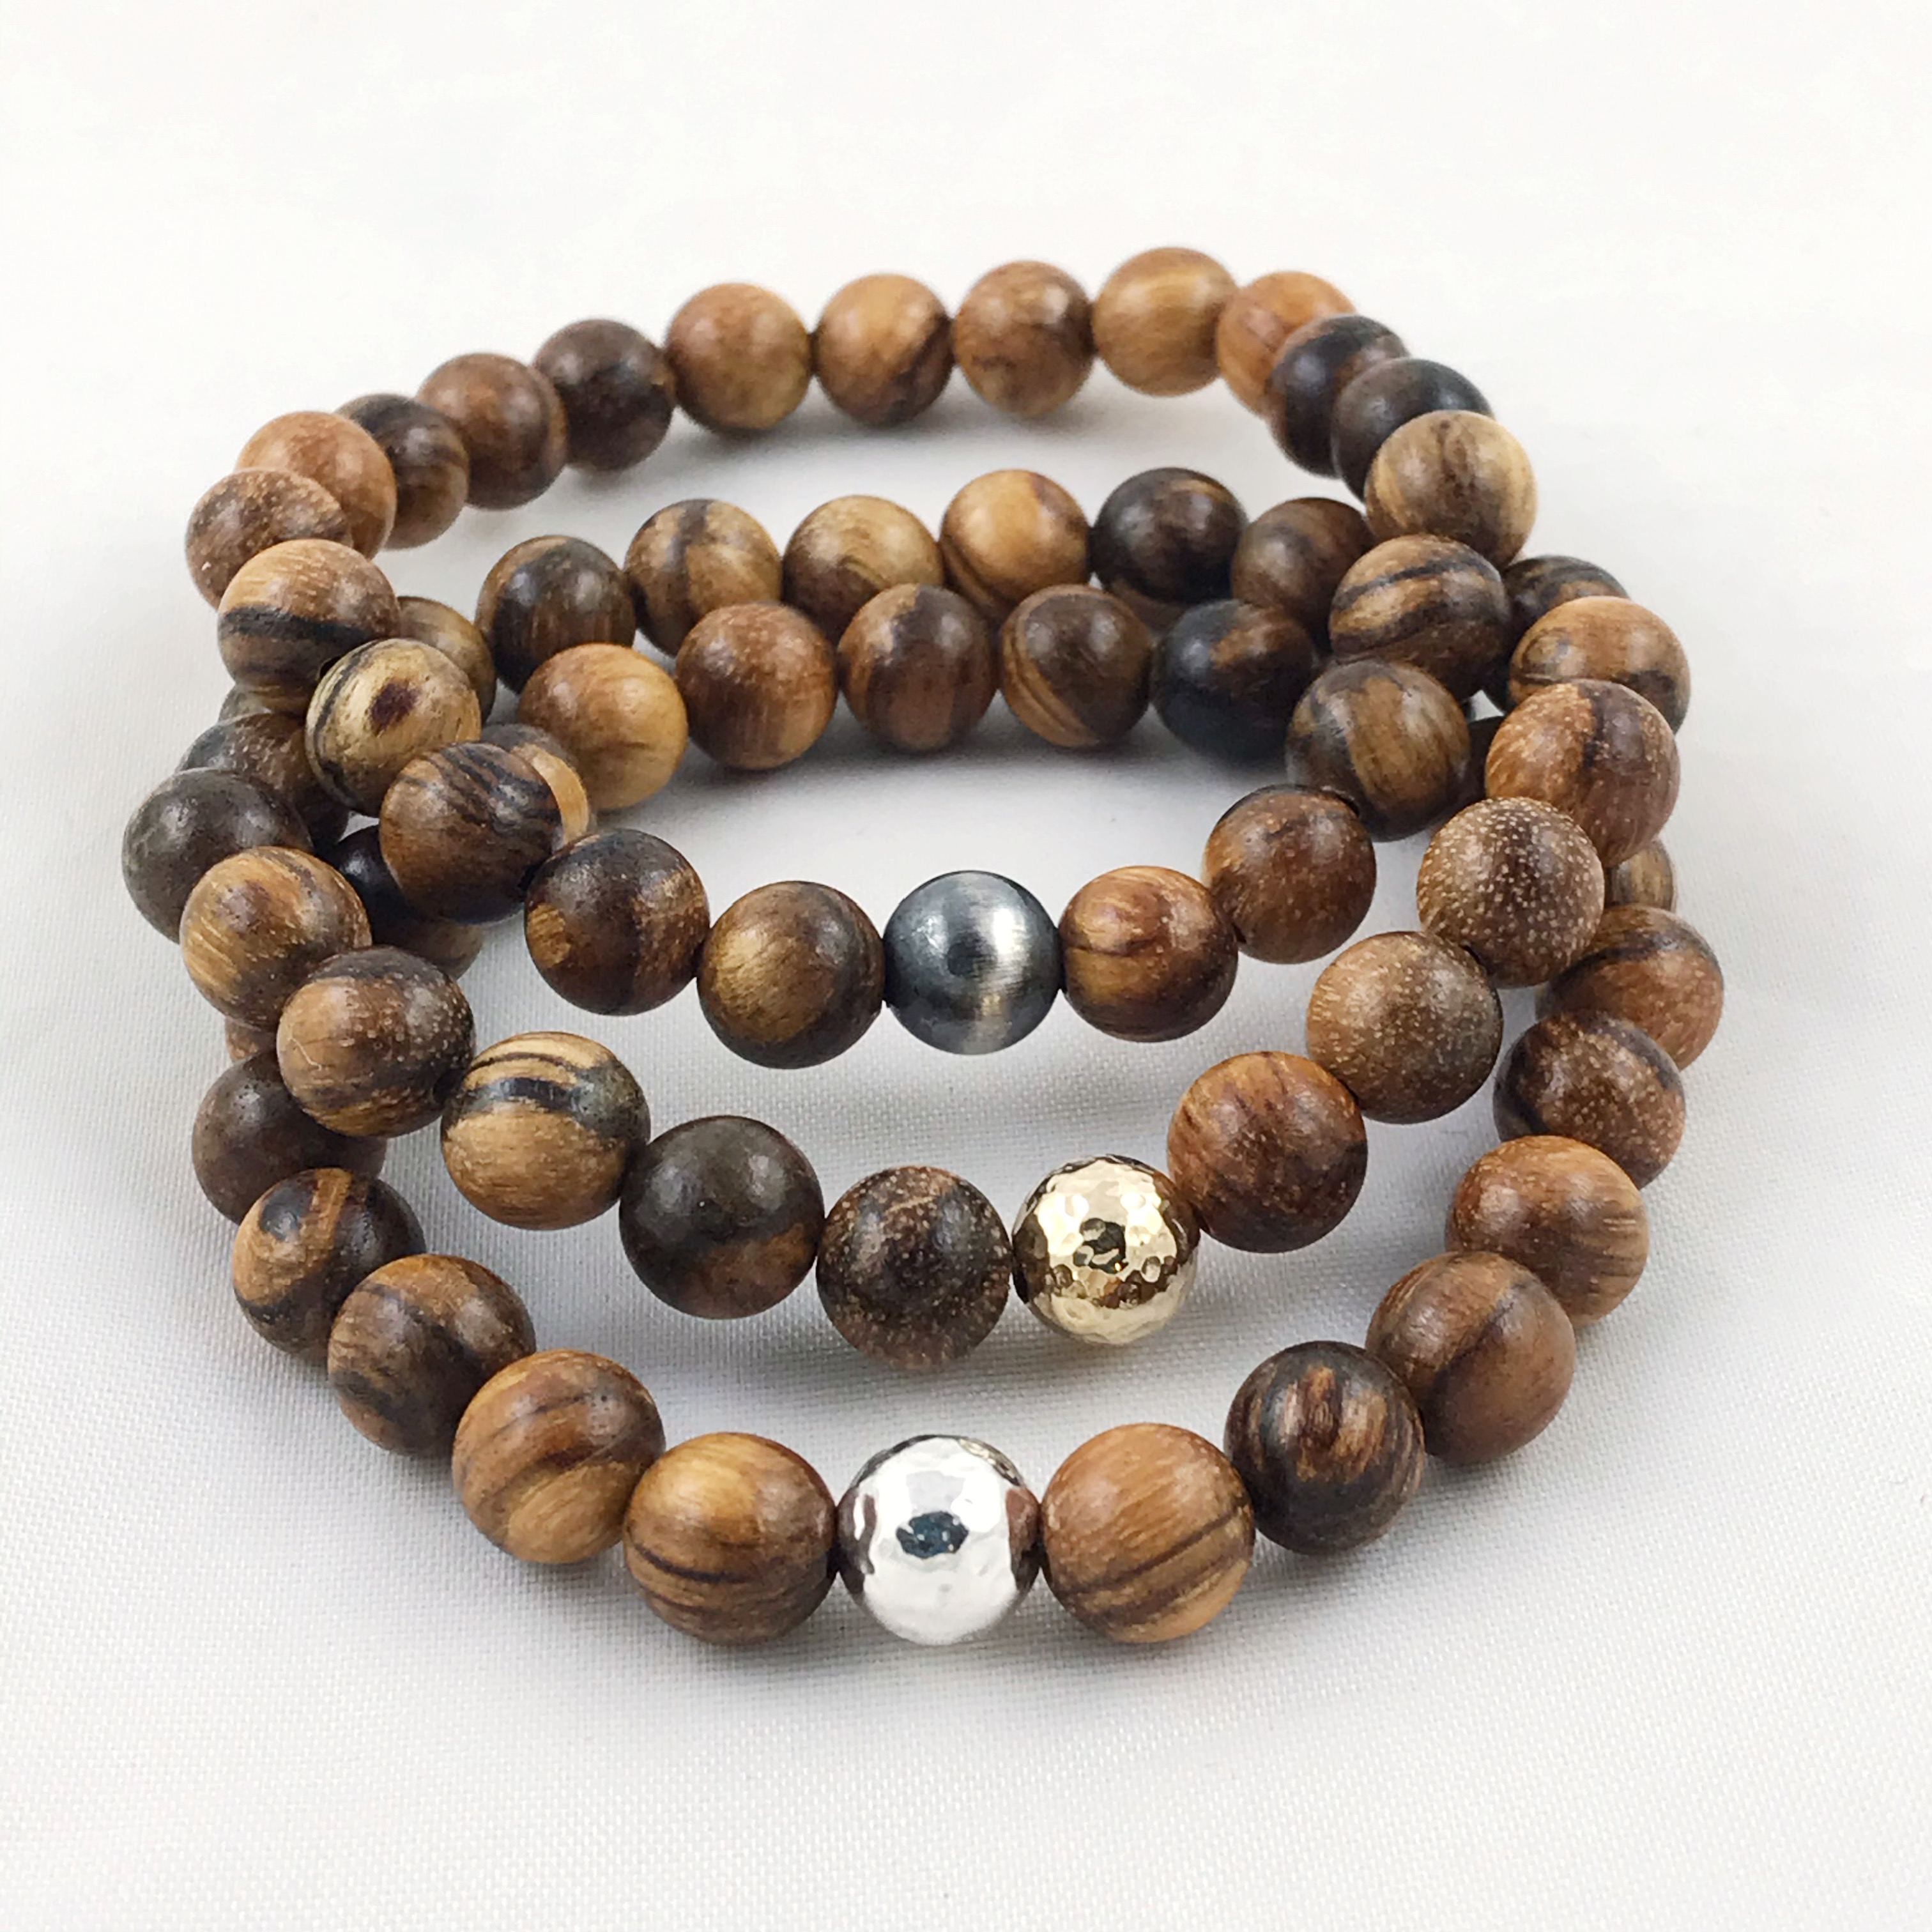 Wood Bracelet / 8mm Cedarwood Beads / Your Choice Of Metal Accent Bead /  Men's Women's Unisex Bracelet